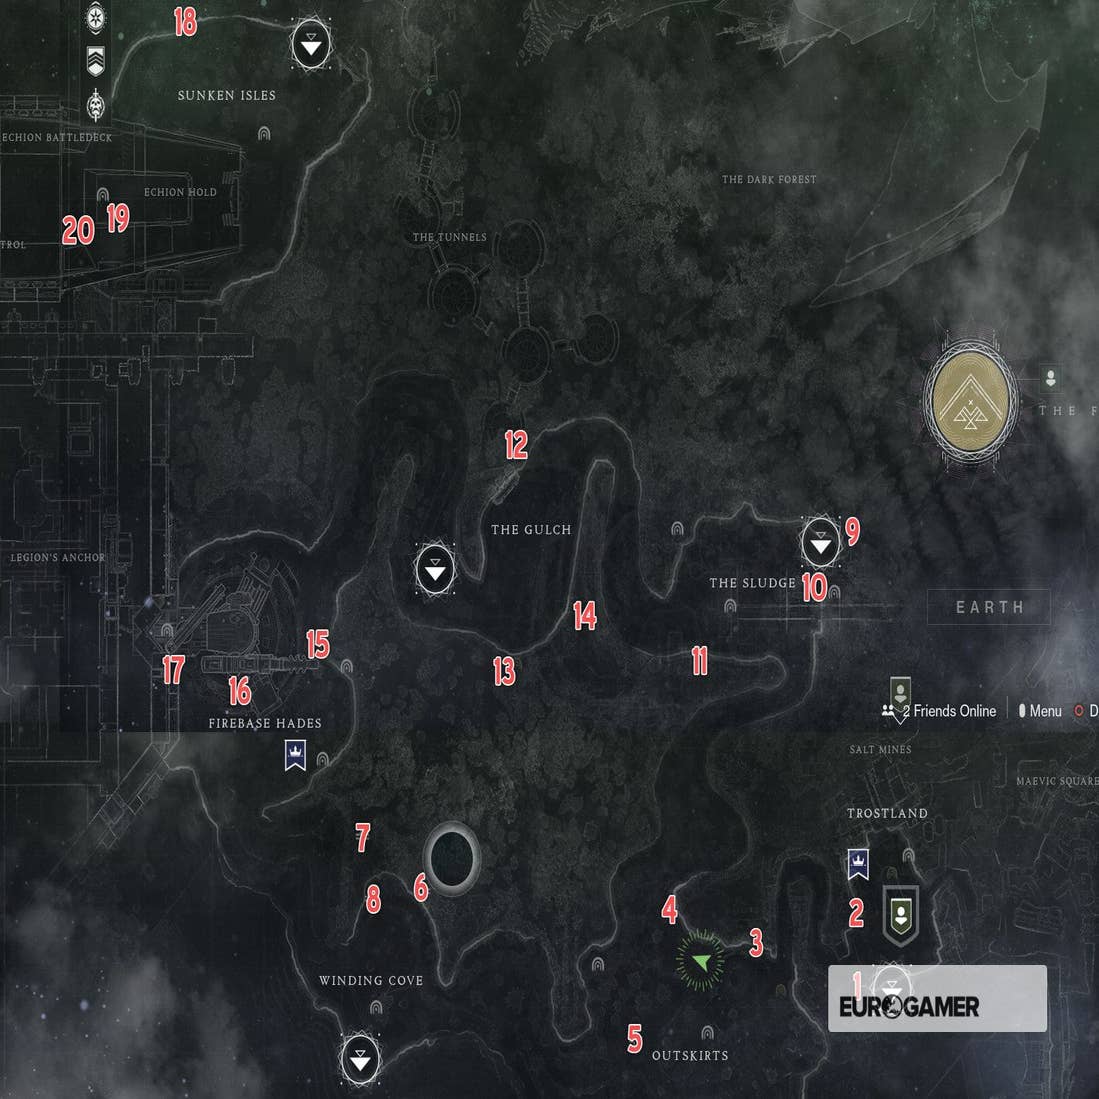 Destiny 2 guide: Cayde-6 EDZ chest locations, Oct. 3-9 - Polygon